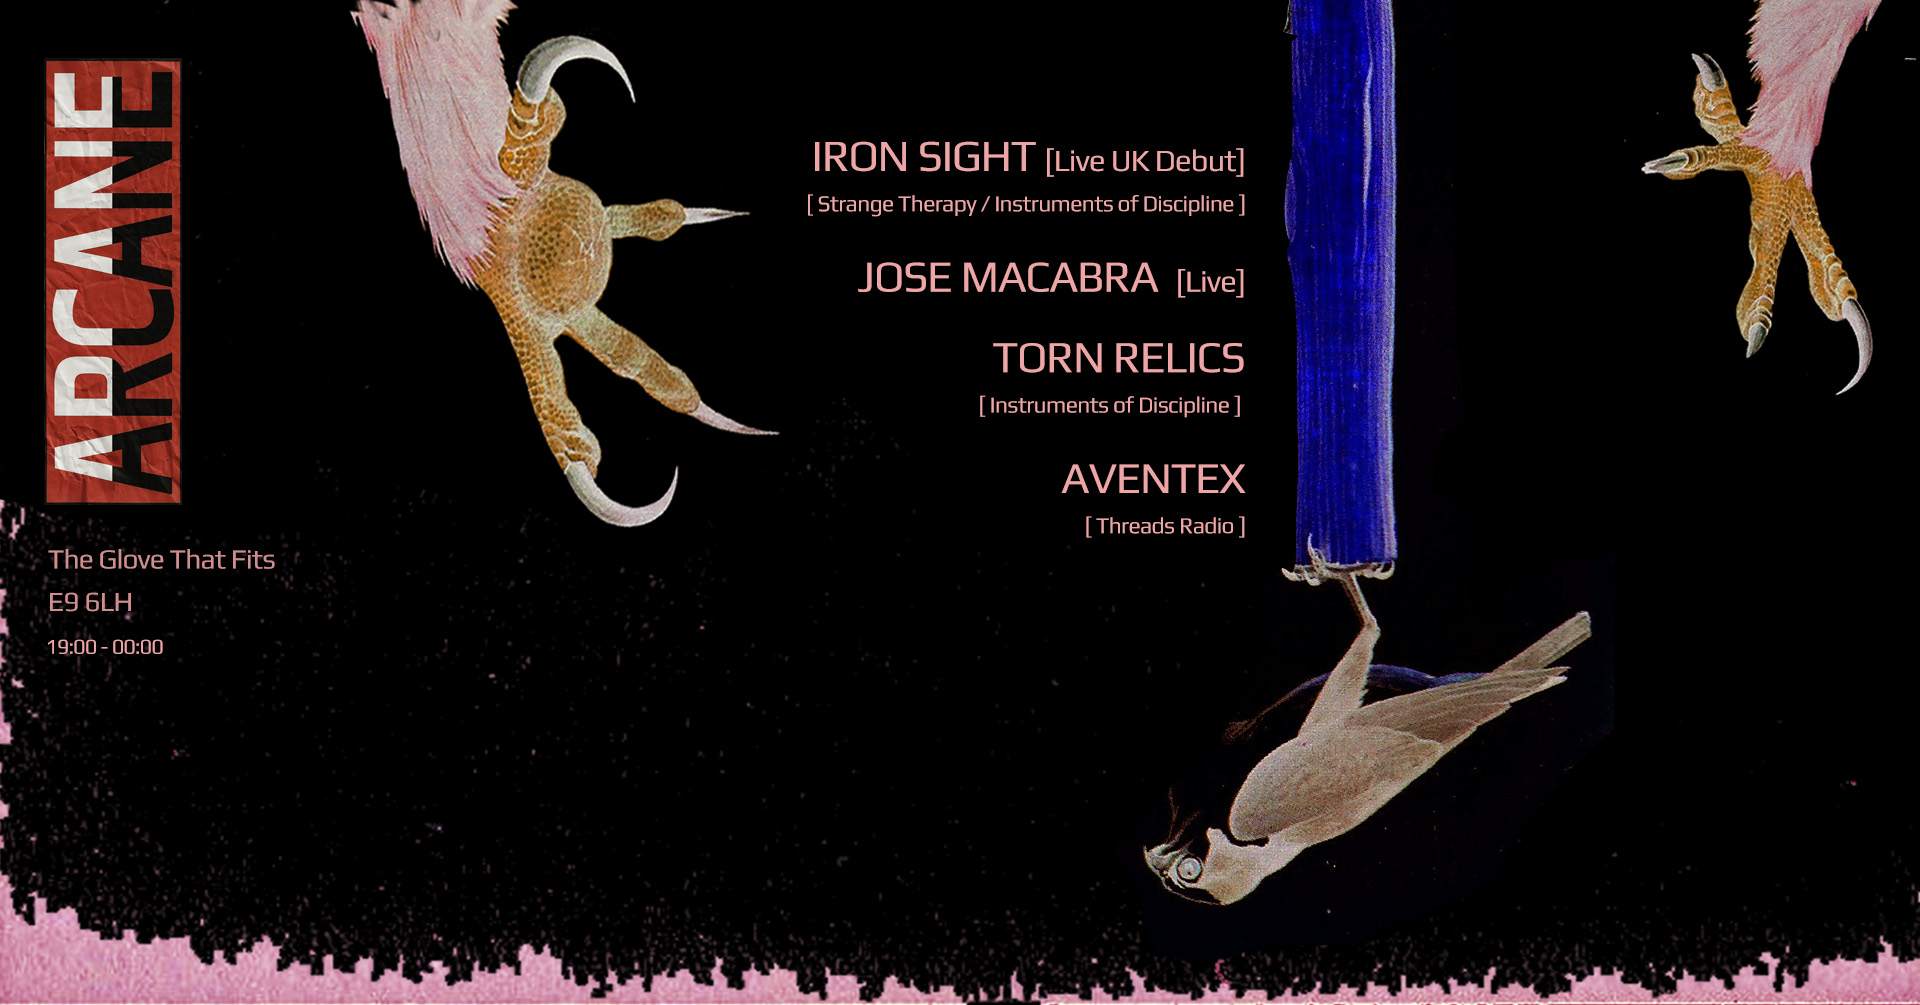 Arcane: Iron Sight (Live UK Debut) Jose Macabra (Live) Torn Relics & Aventex  - フライヤー表